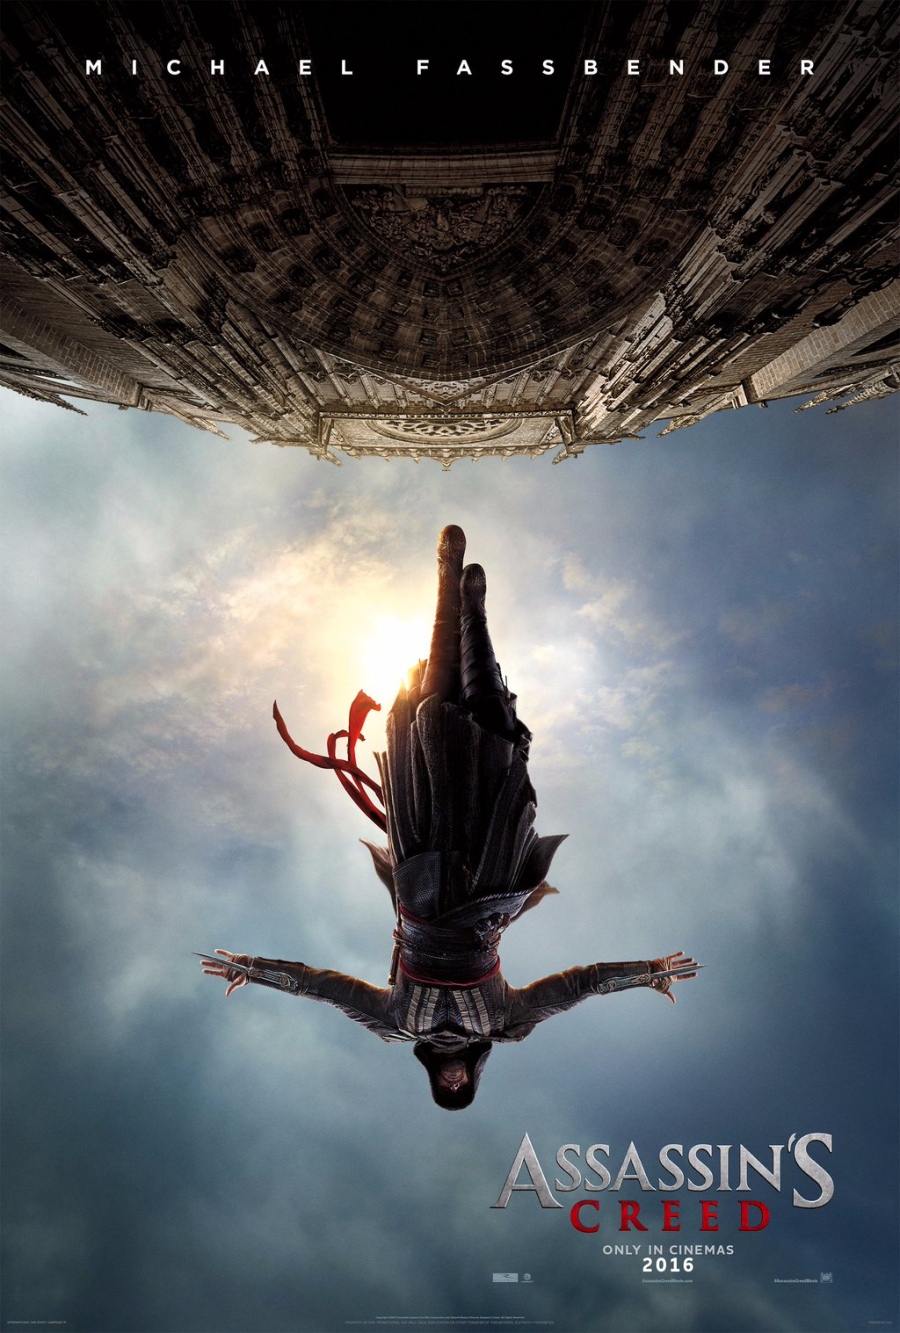 Det første filmatiske beviset på at Assassin’s Creed kommer på kino